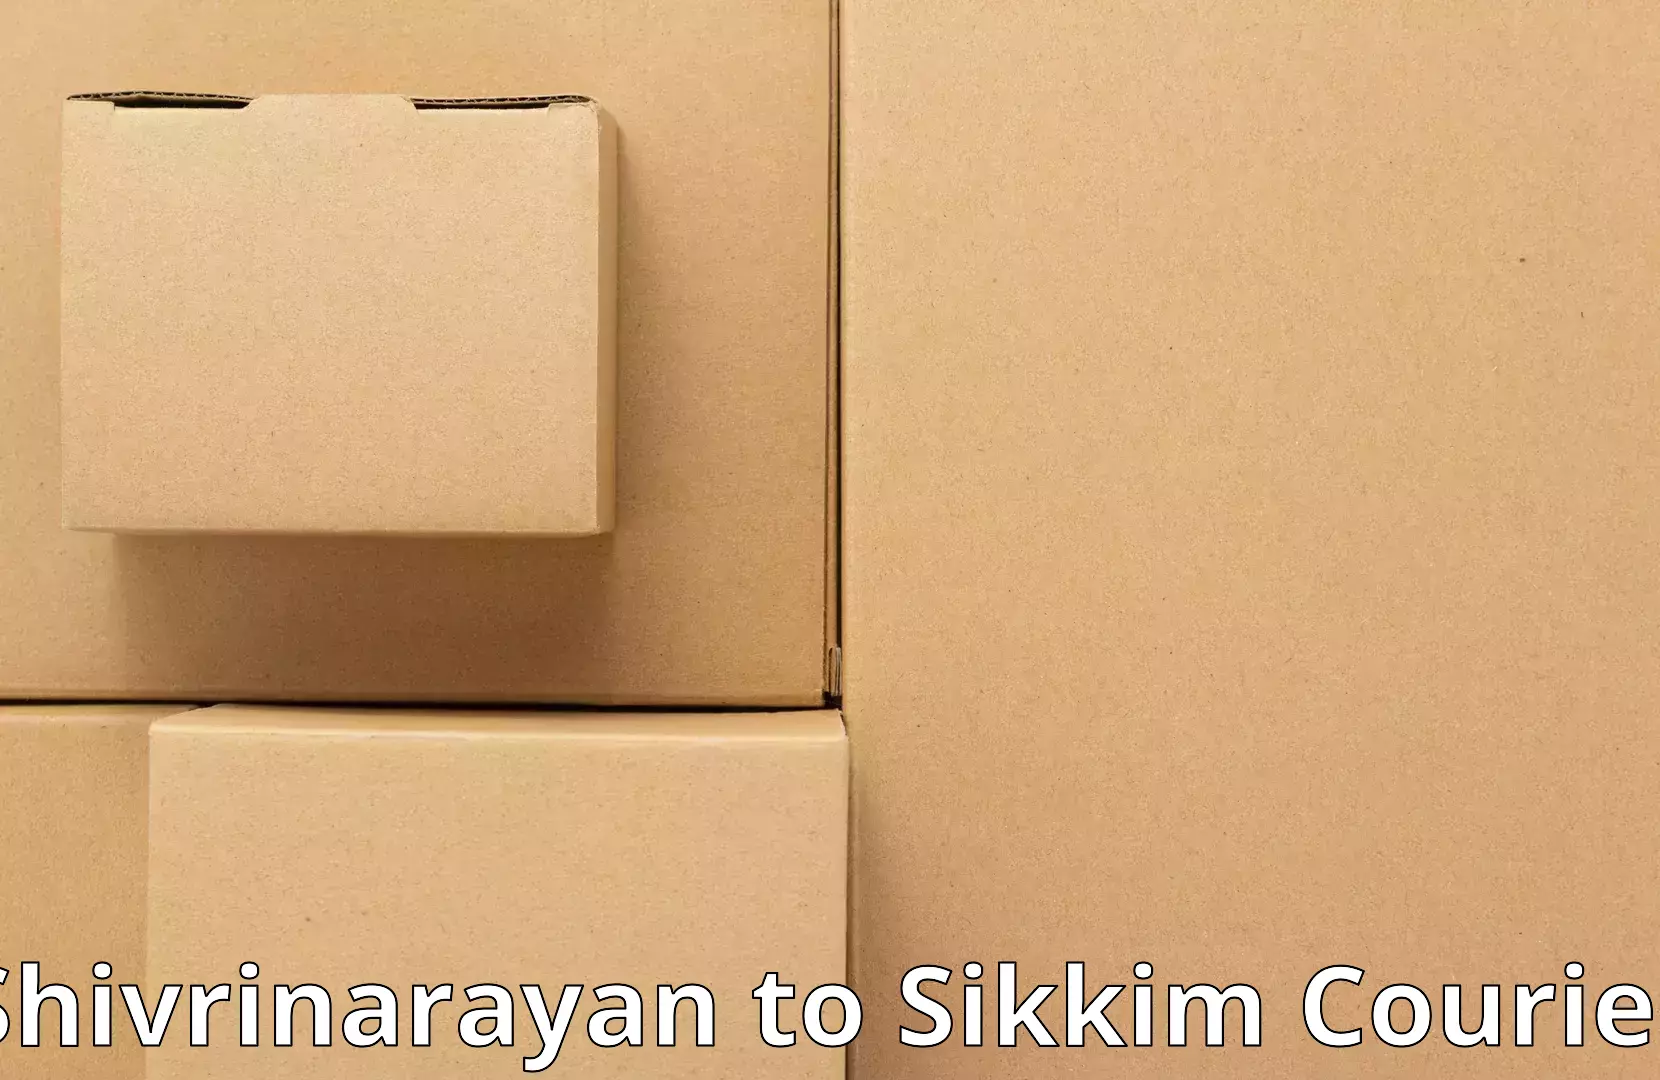 Professional packing services Shivrinarayan to Geyzing